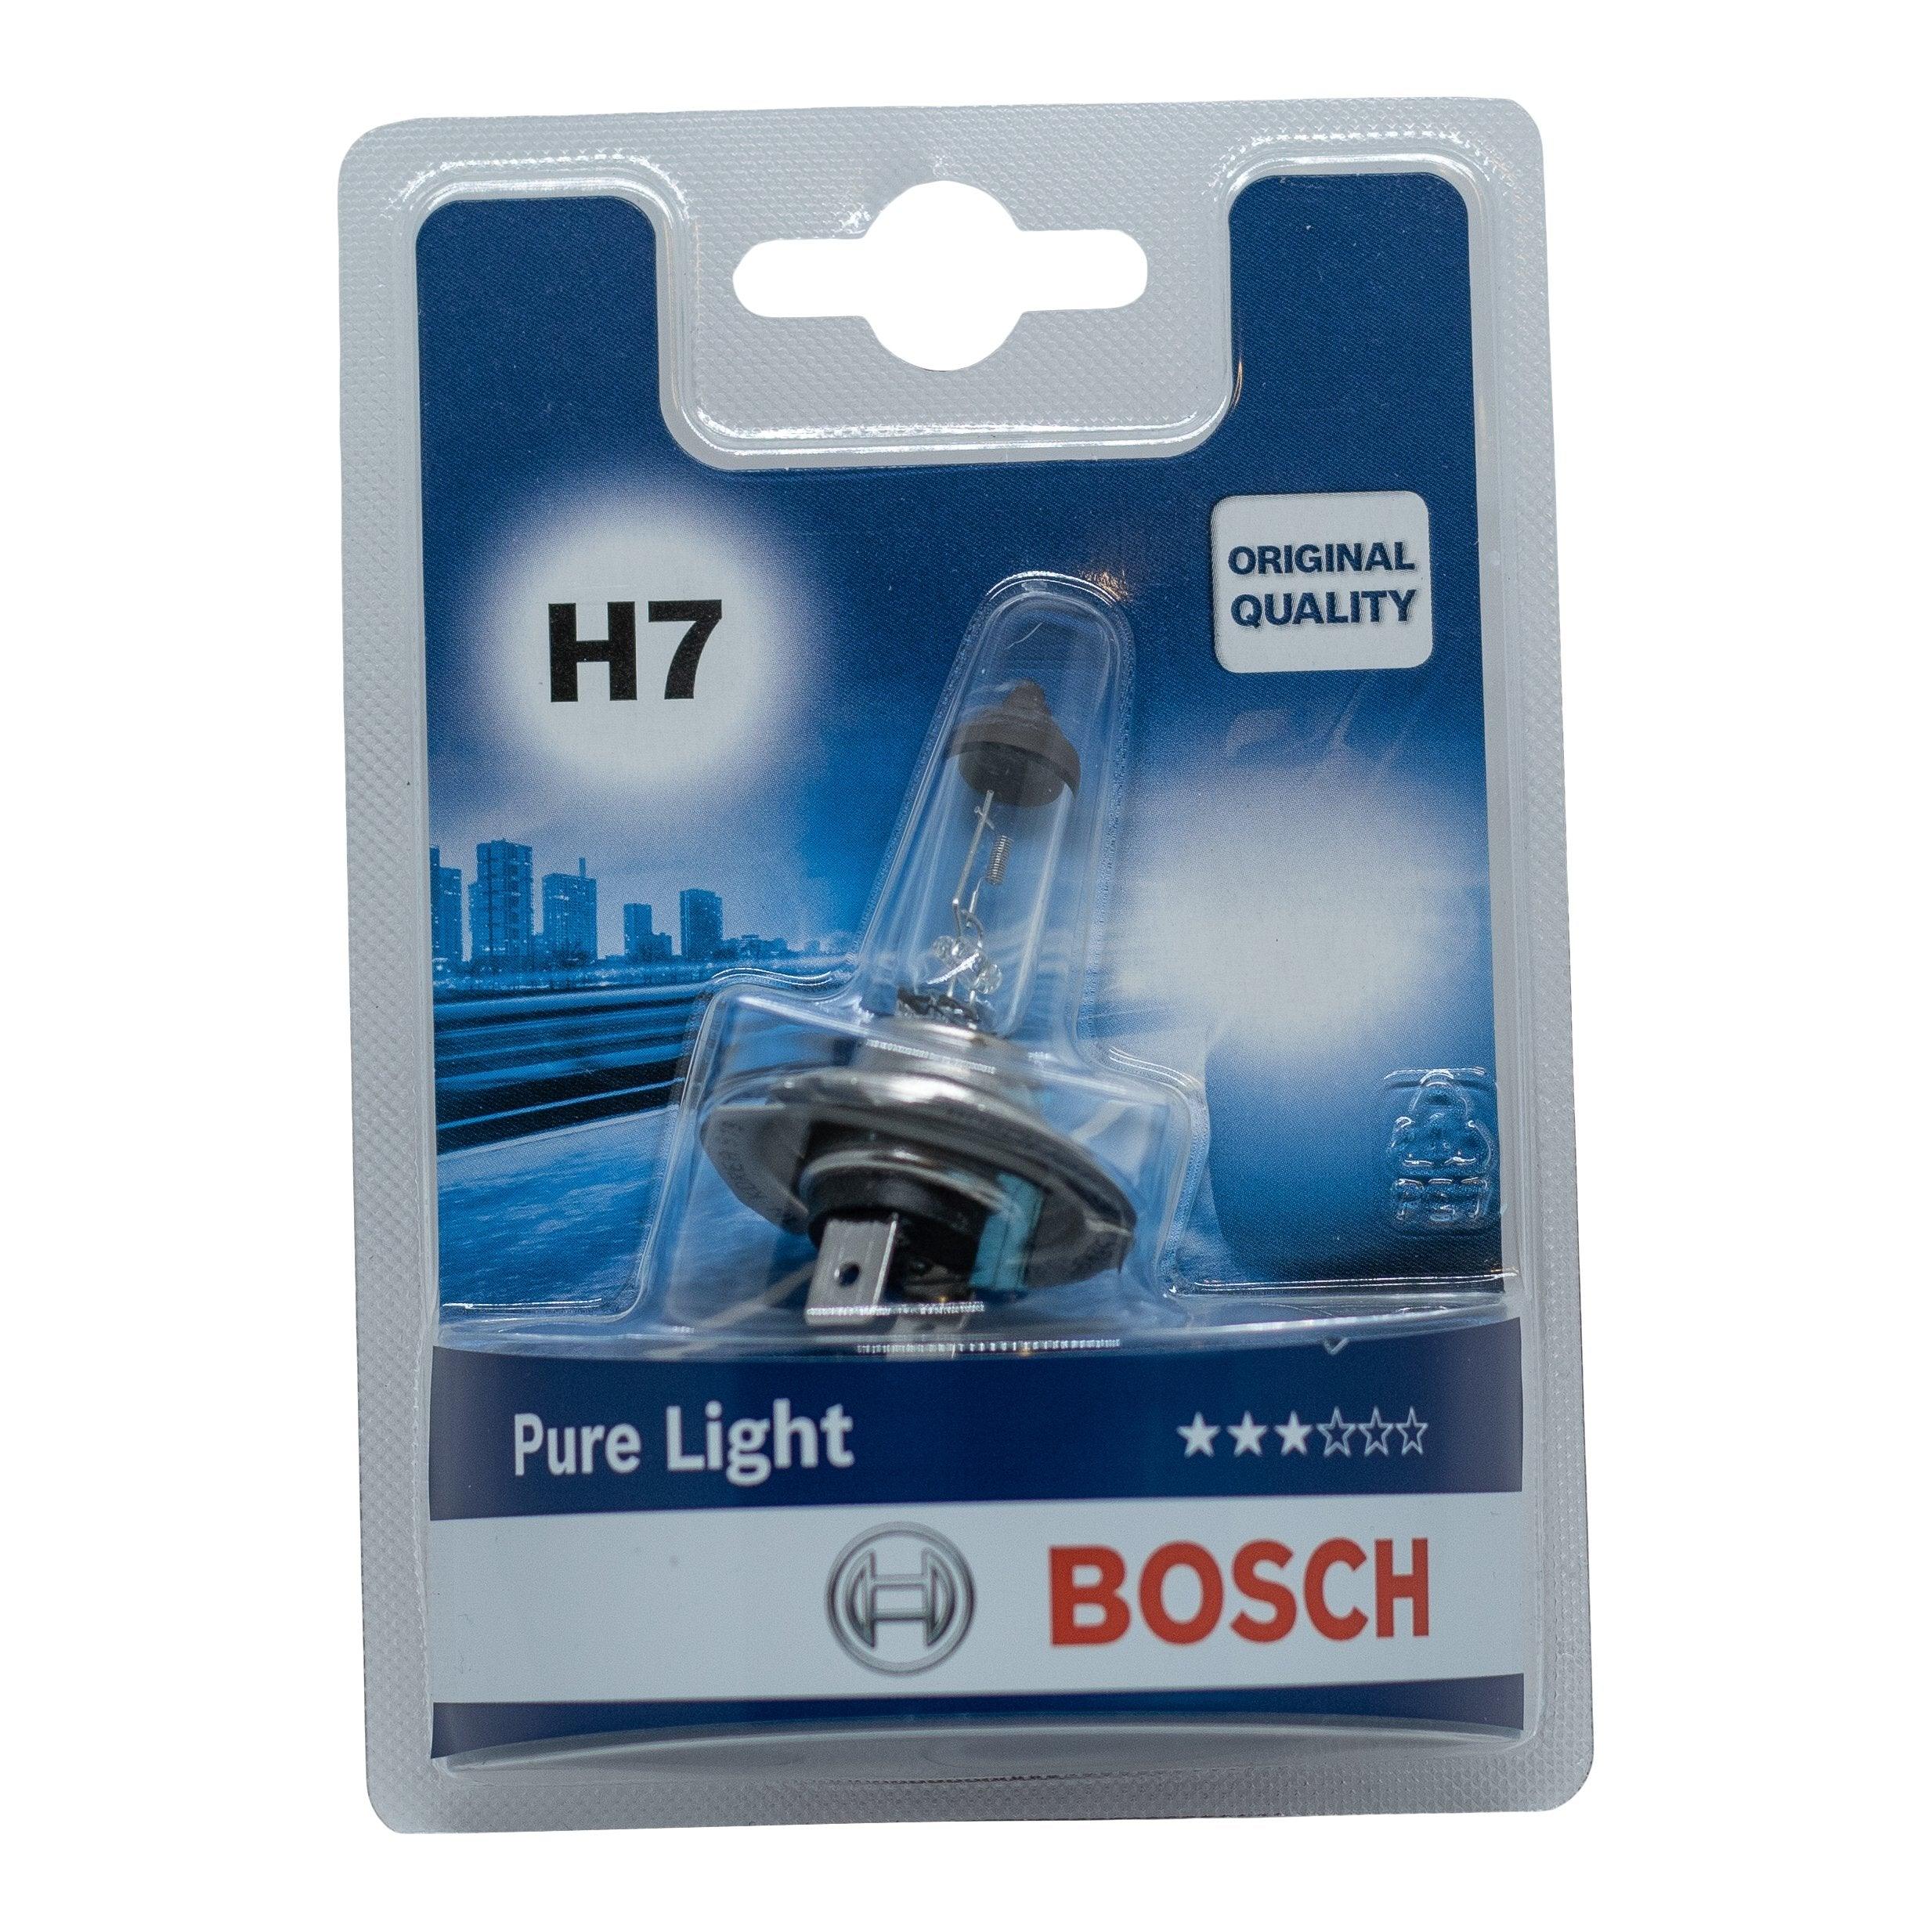 Se Bosch Pure Light H7 hos XpertCleaning.dk